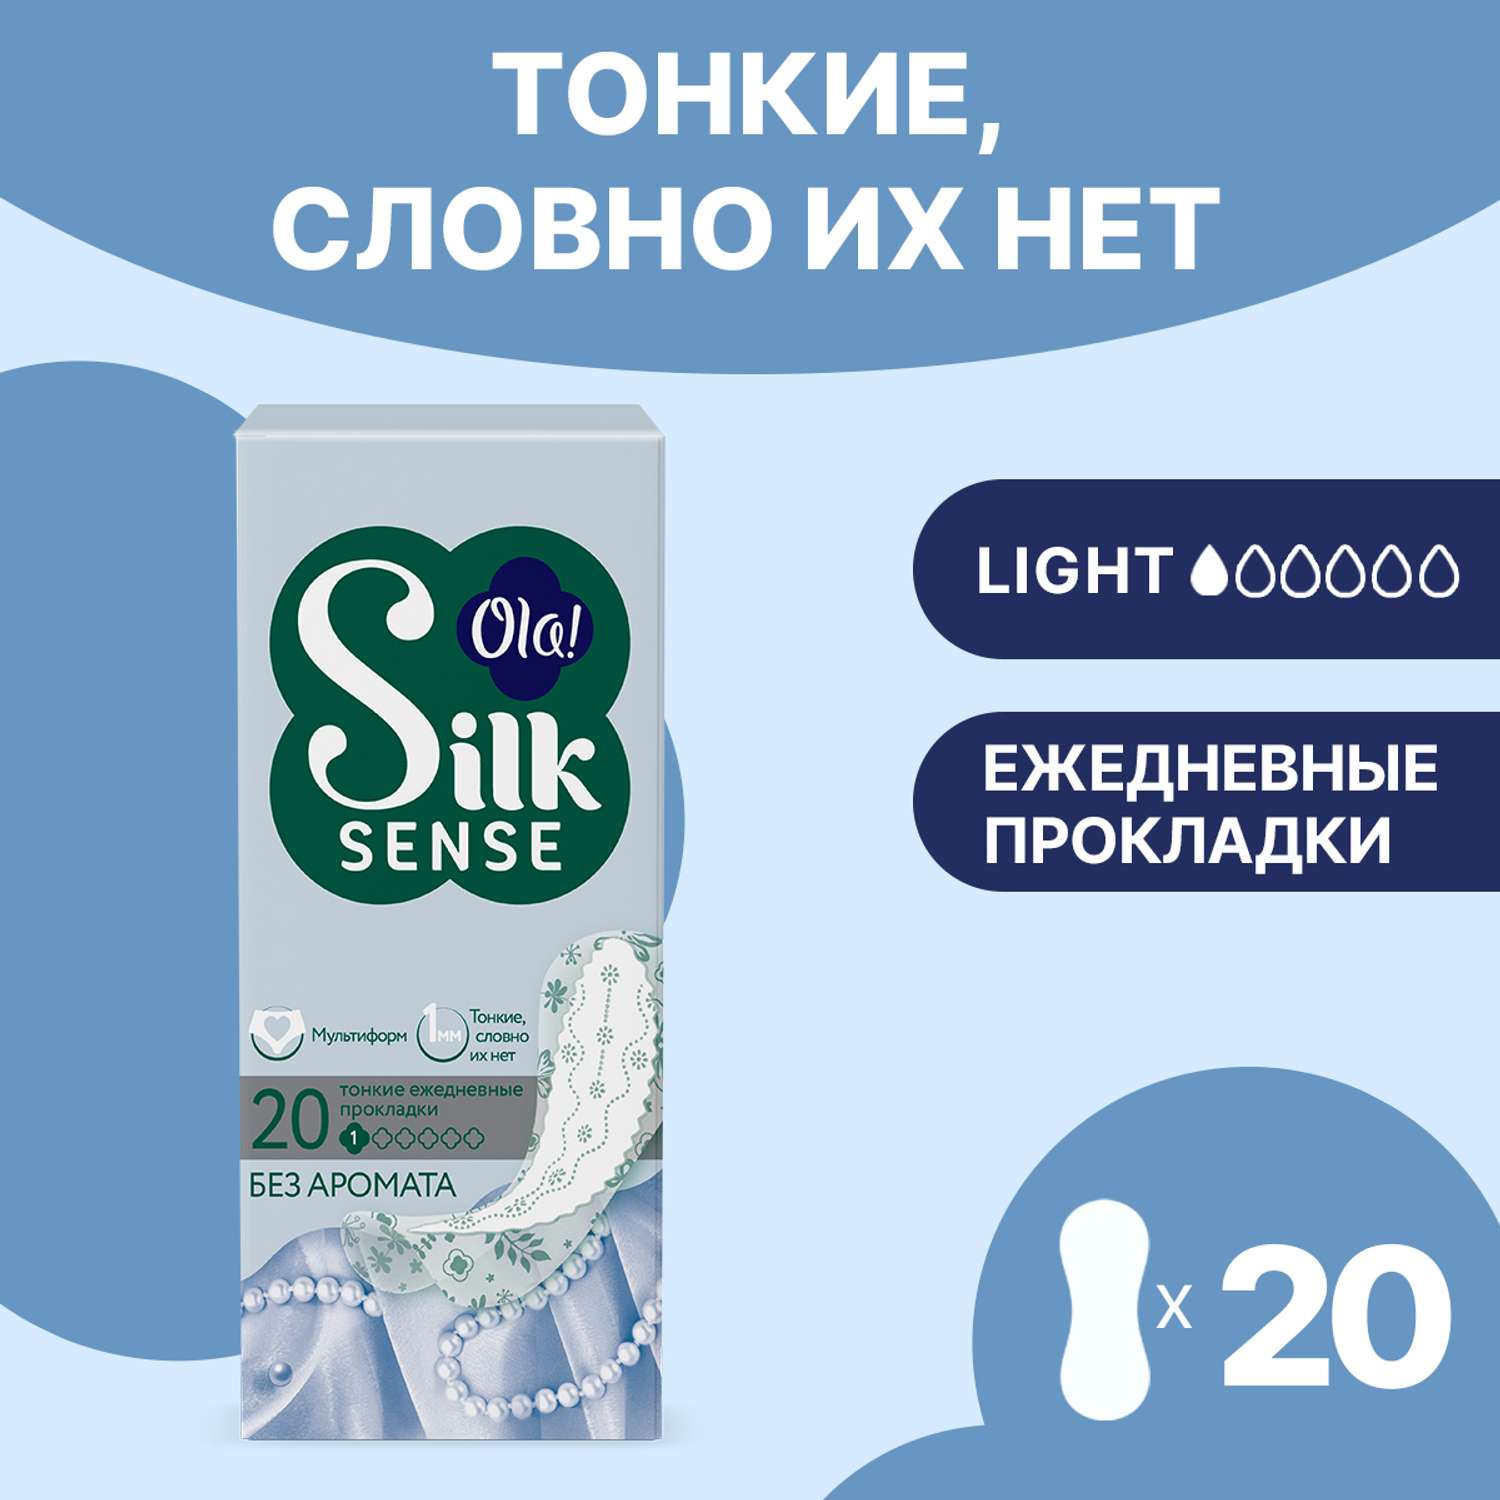 Ежедневные прокладки тонкие Ola! Silk Sense LIGHT стринг-мультиформ без аромата 20 шт - фото 1